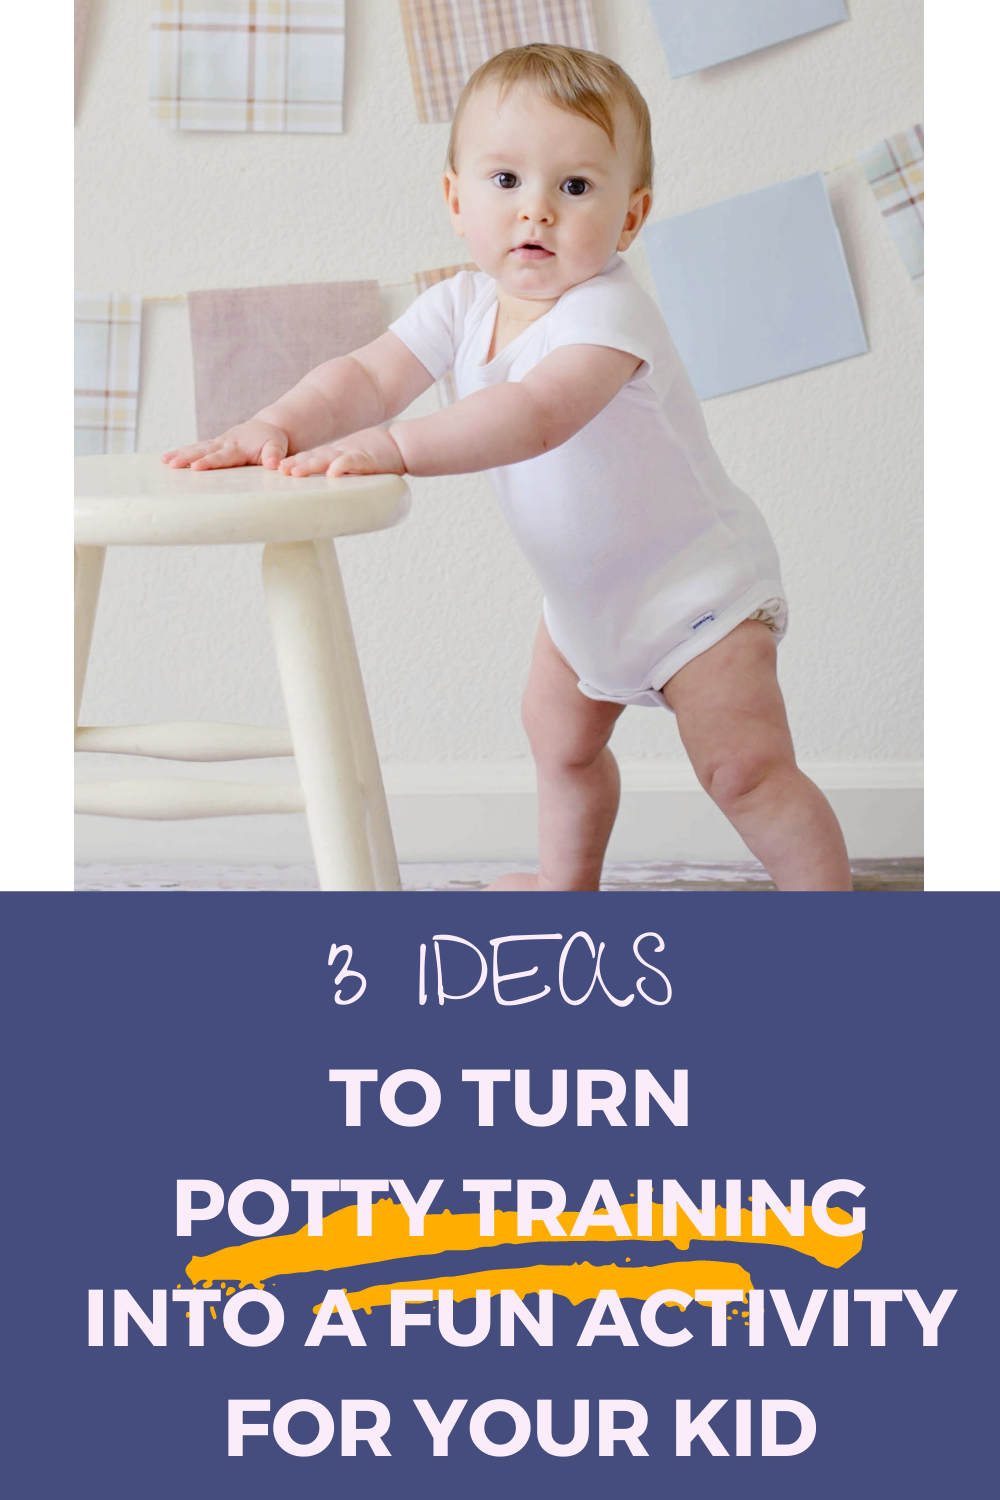 3-ideas-to-turn-potty-training-into-a-fun-activity